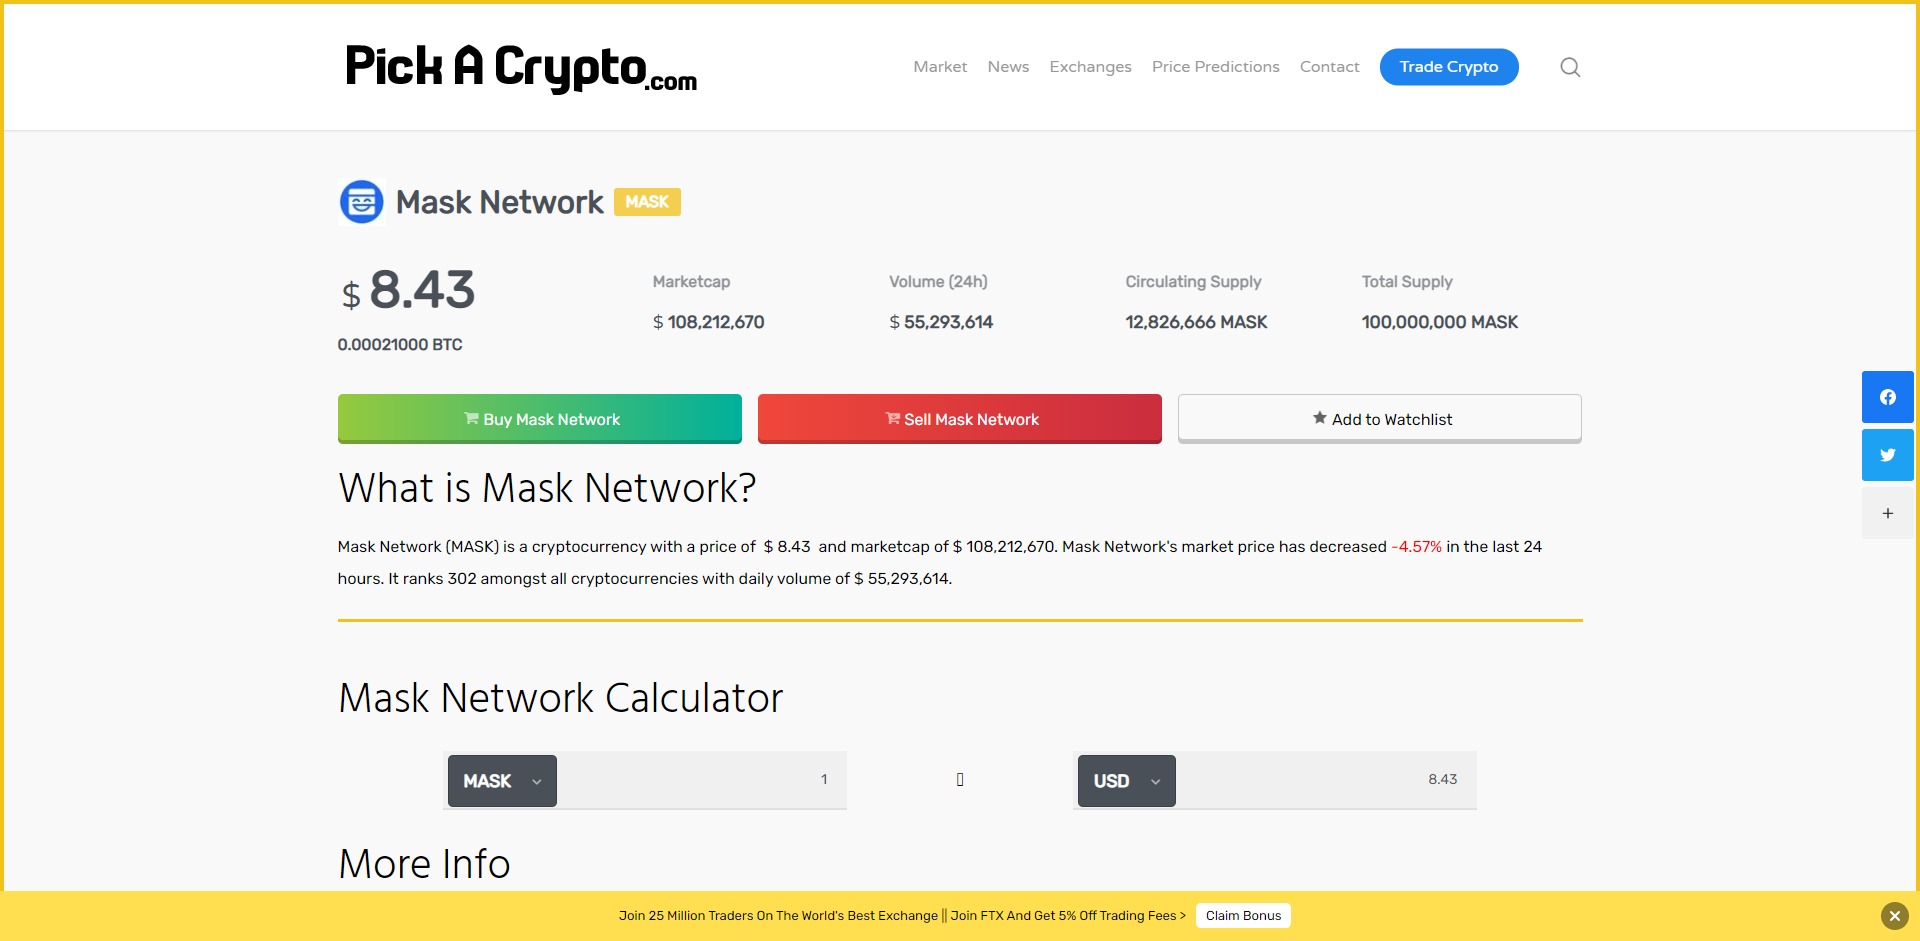 Mask Network MASK Price Prediction Market